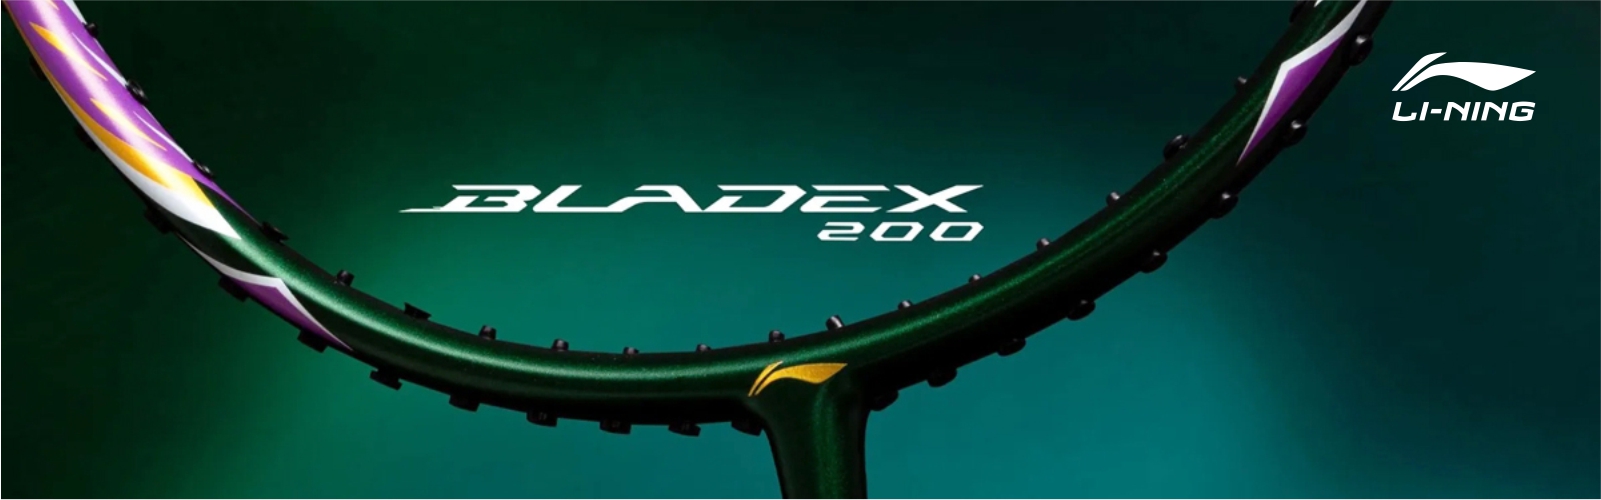 BLADEX200R